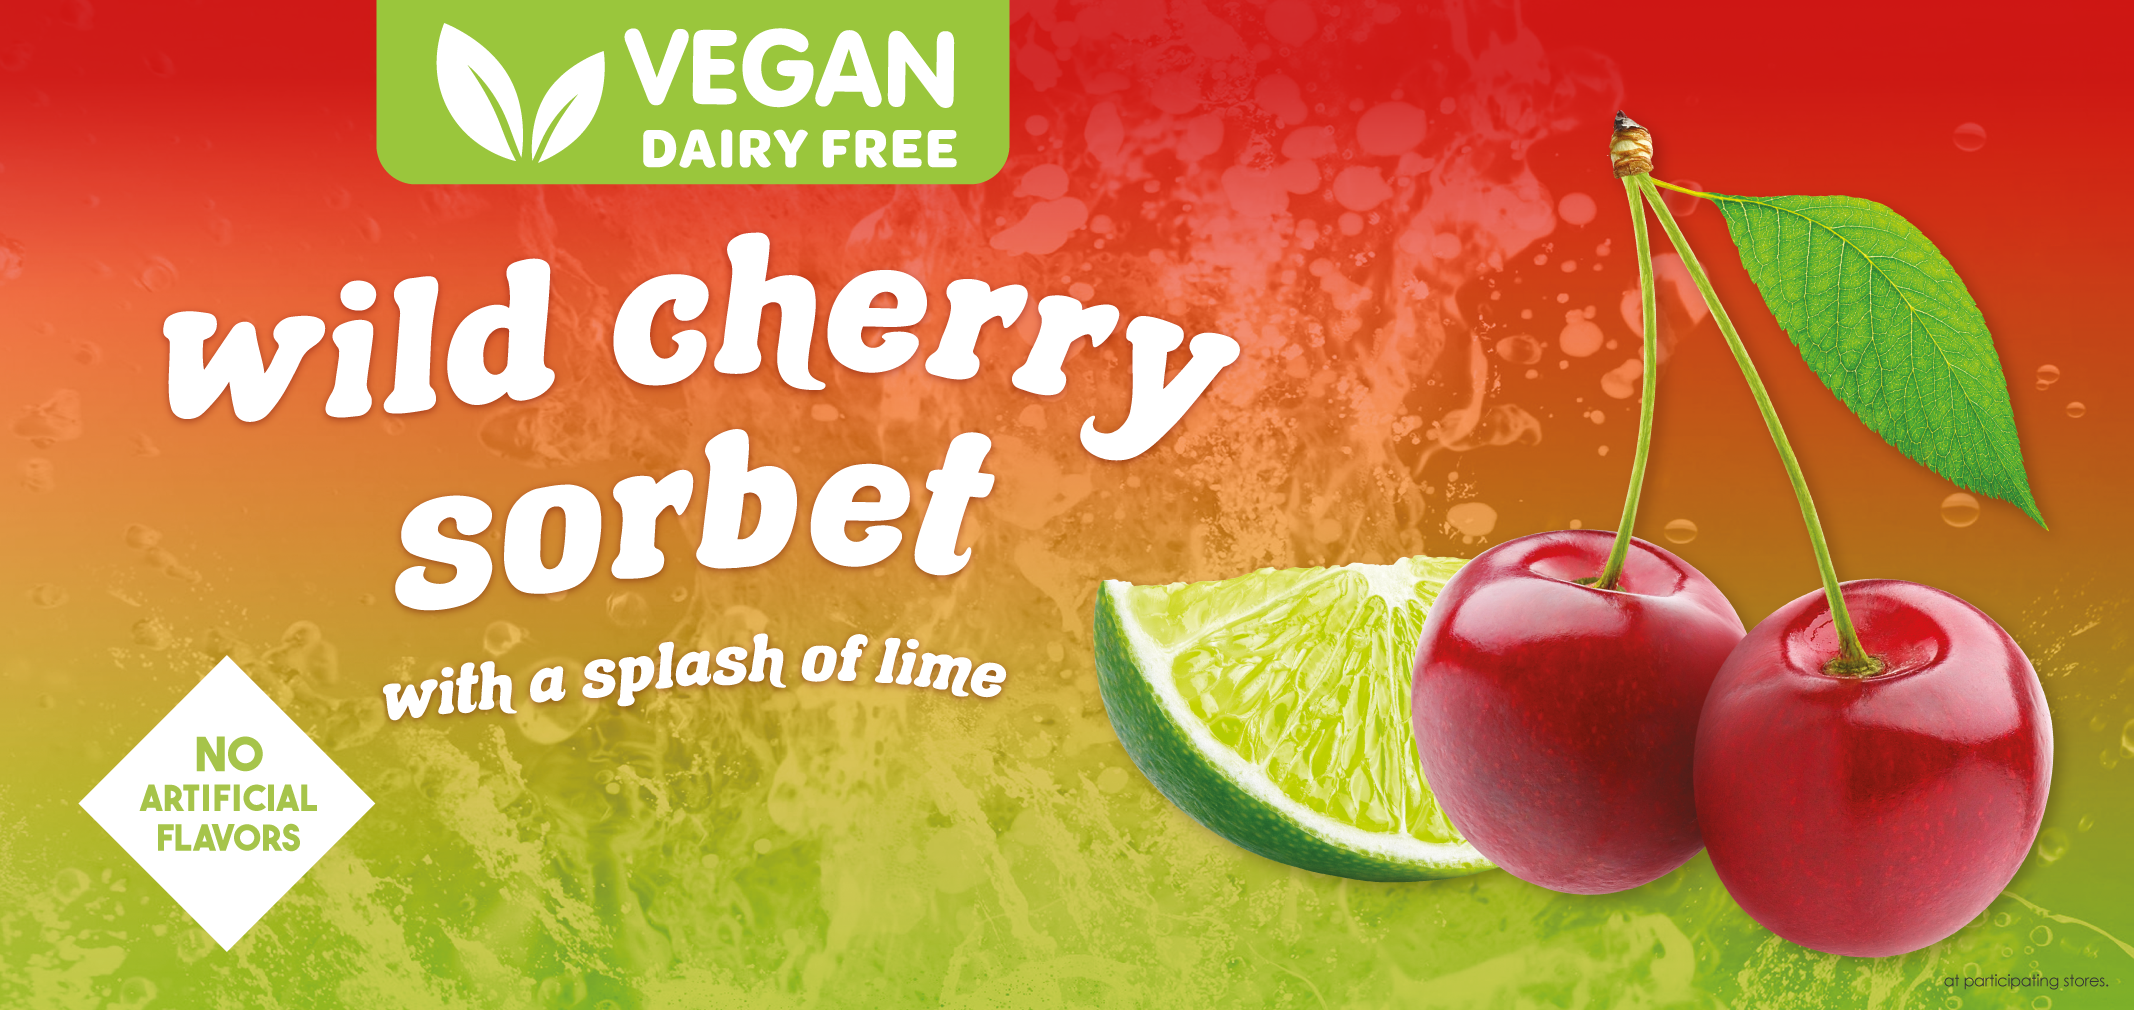 vegan wild cherry sorbet with a splash of lime label image